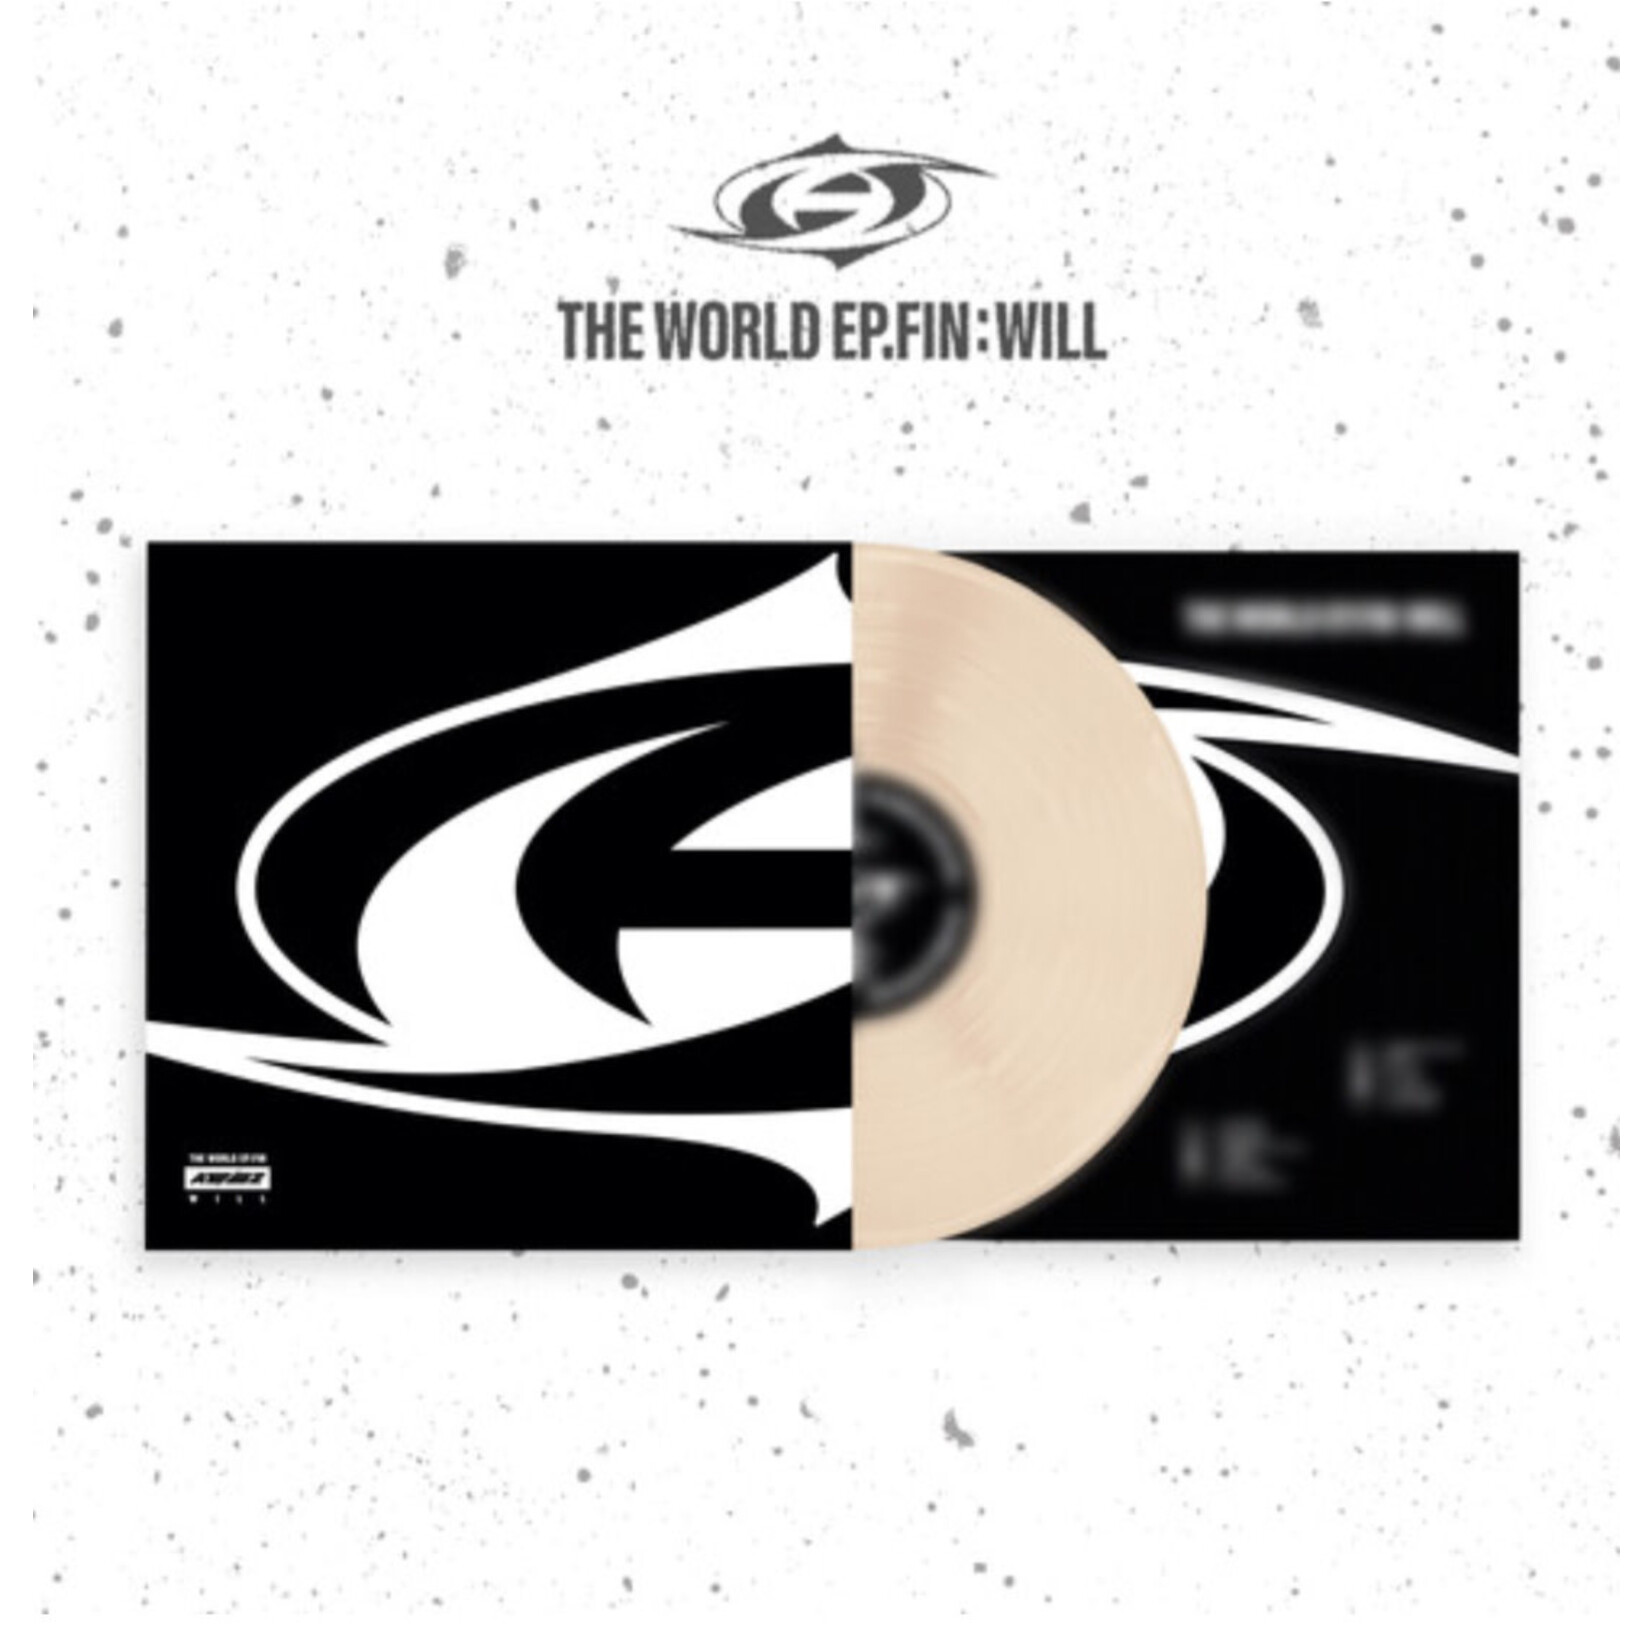 Ateez - The World EP.Fin : Will - RCAH2312005 - Vinyl LP (NEW)